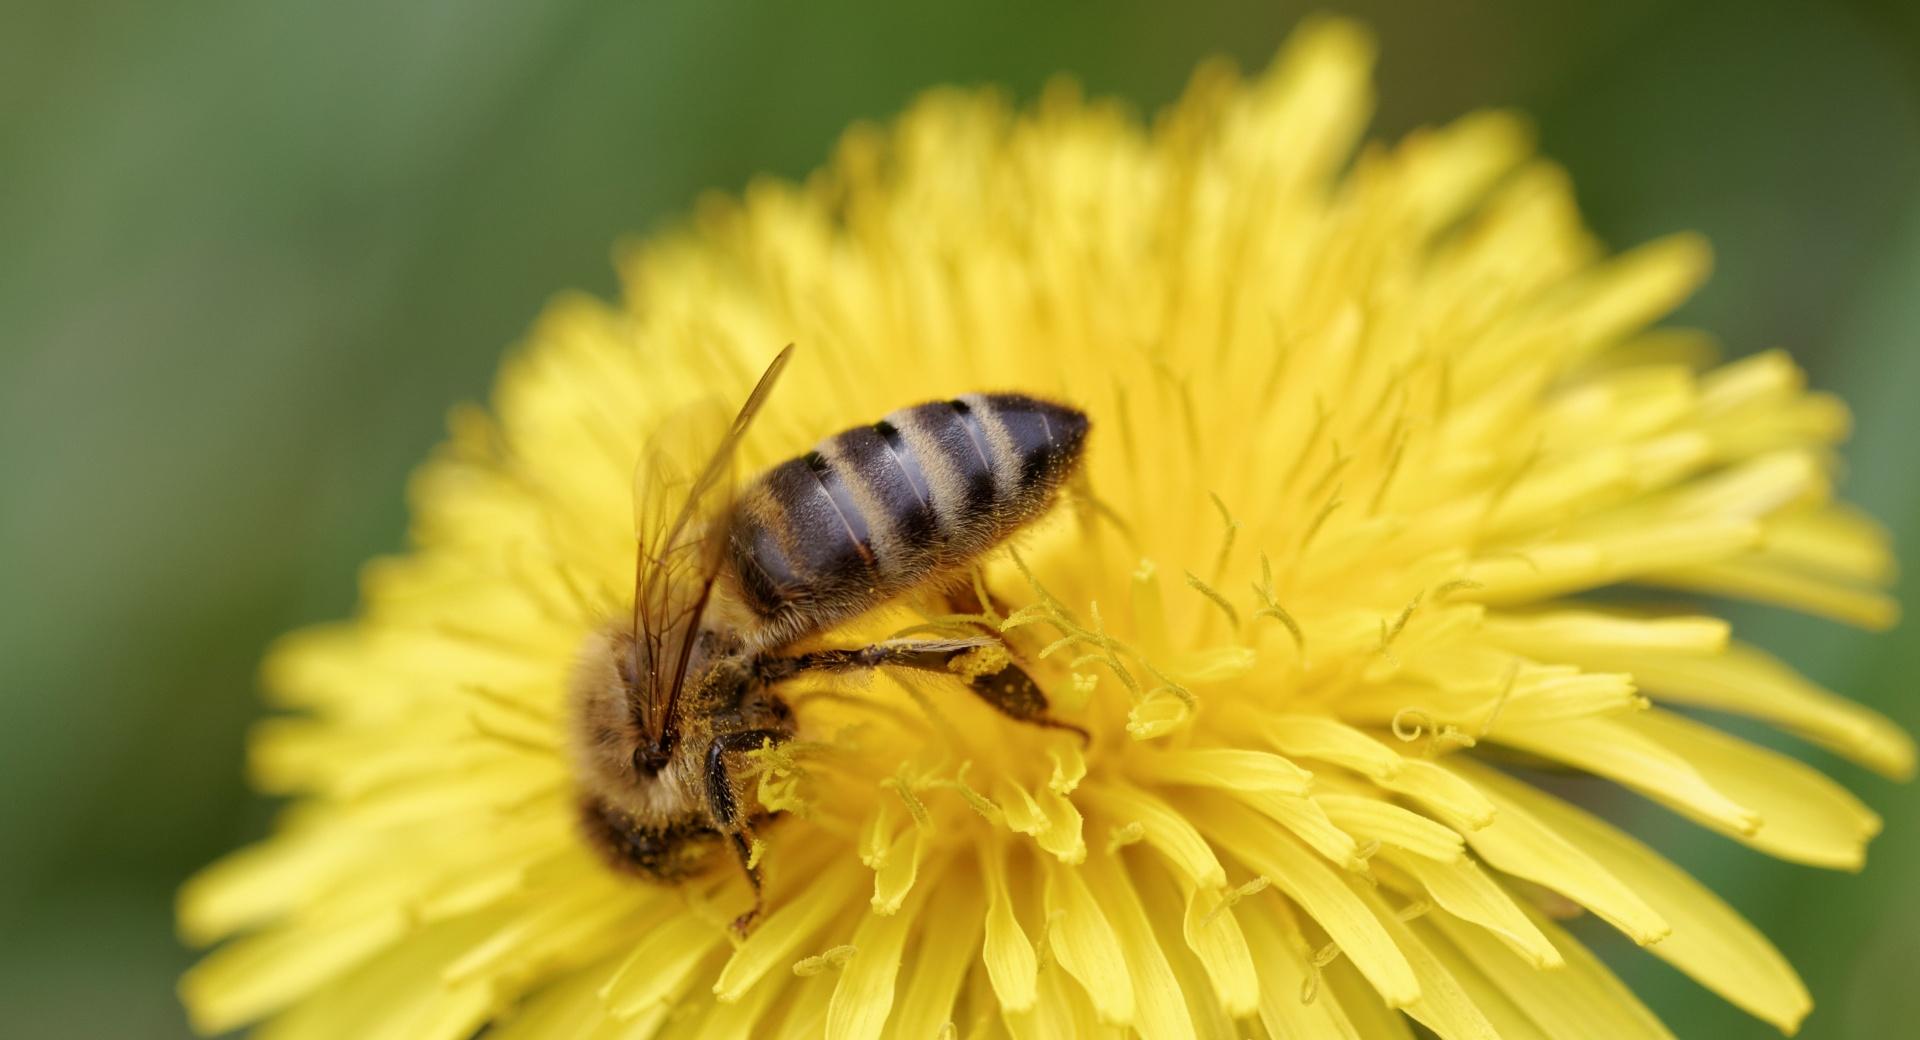 Honey Bee, Honigbiene at 1024 x 1024 iPad size wallpapers HD quality